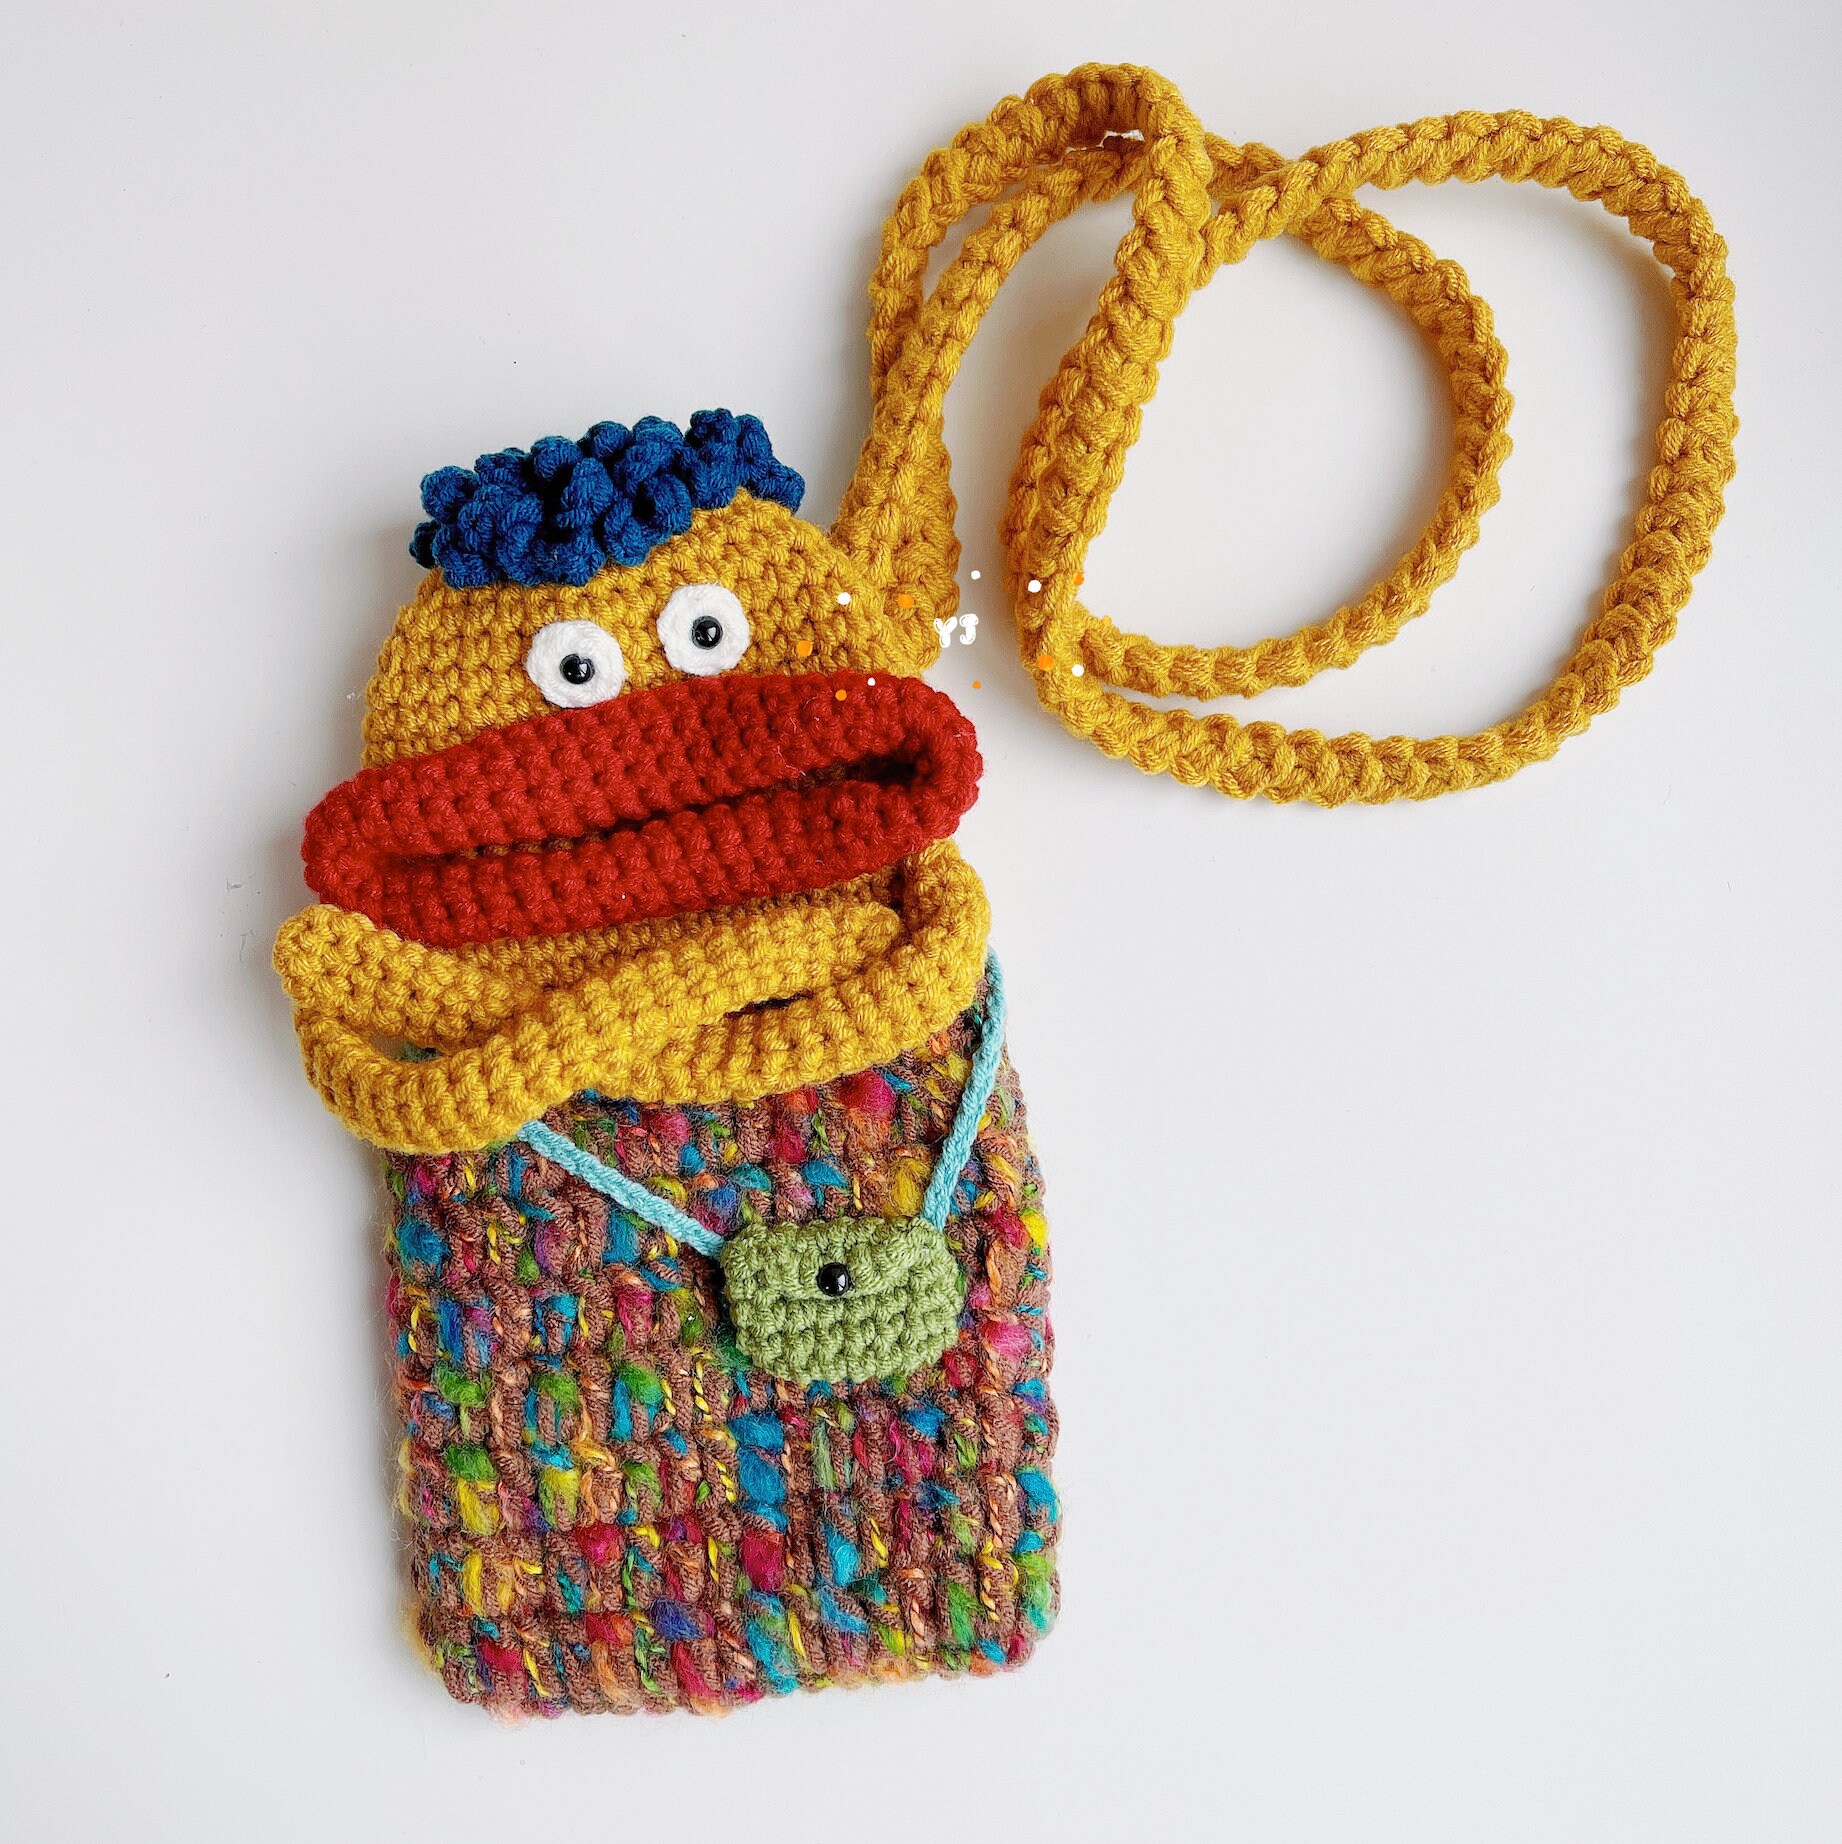 Vintage Crochet Bag, Handmade Knit Bag, Retro Crochet Tote Bag, Woman's  Knit Bag, Large Capacity Bag, Casual Knit Bag, Gift for Girlfriend 